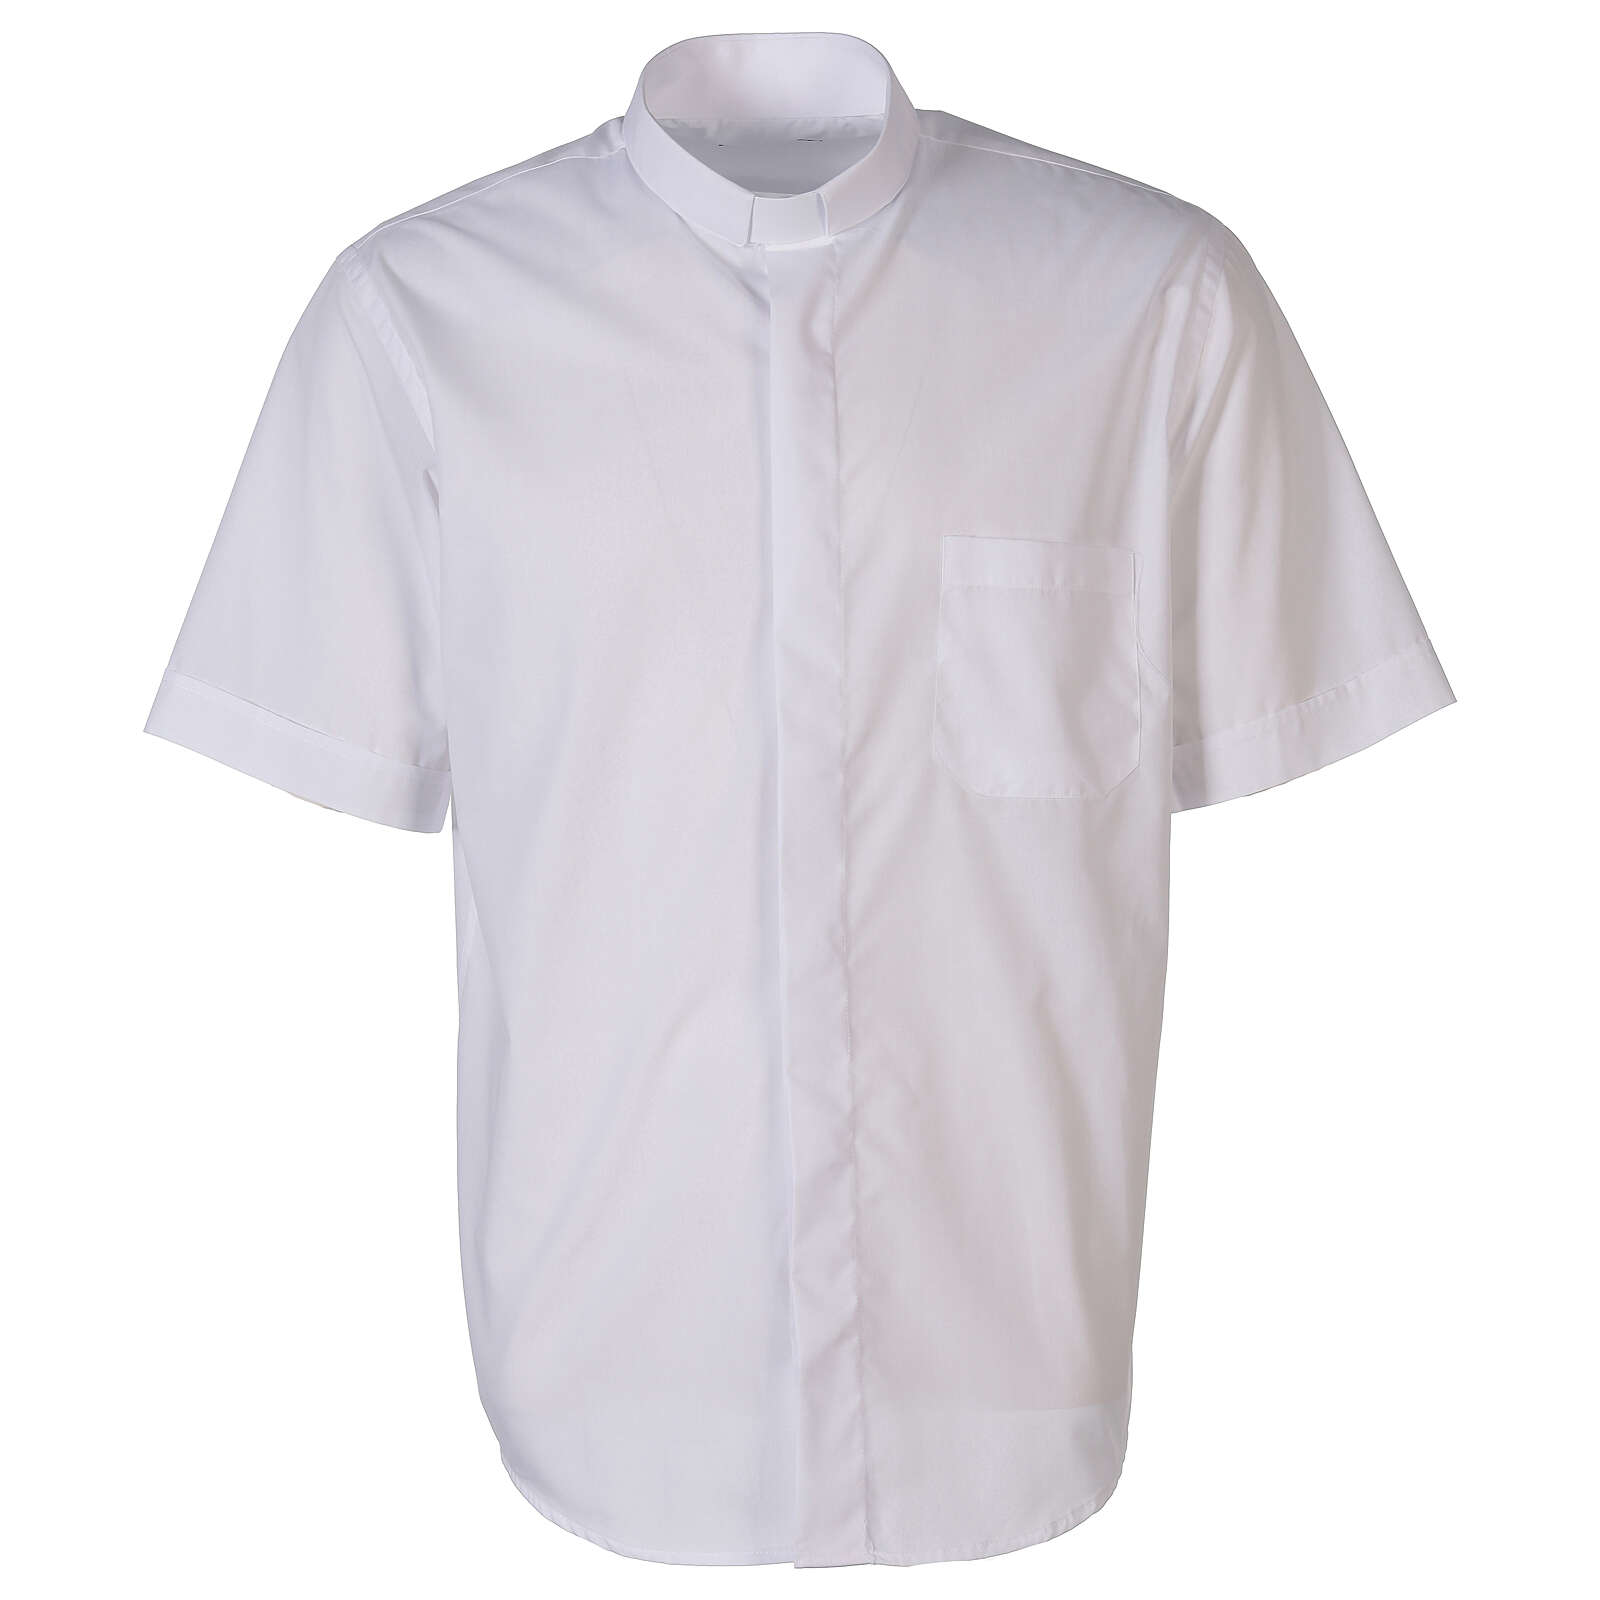 Clergical plain white shirt, short sleeves | online sales on HOLYART.co.uk